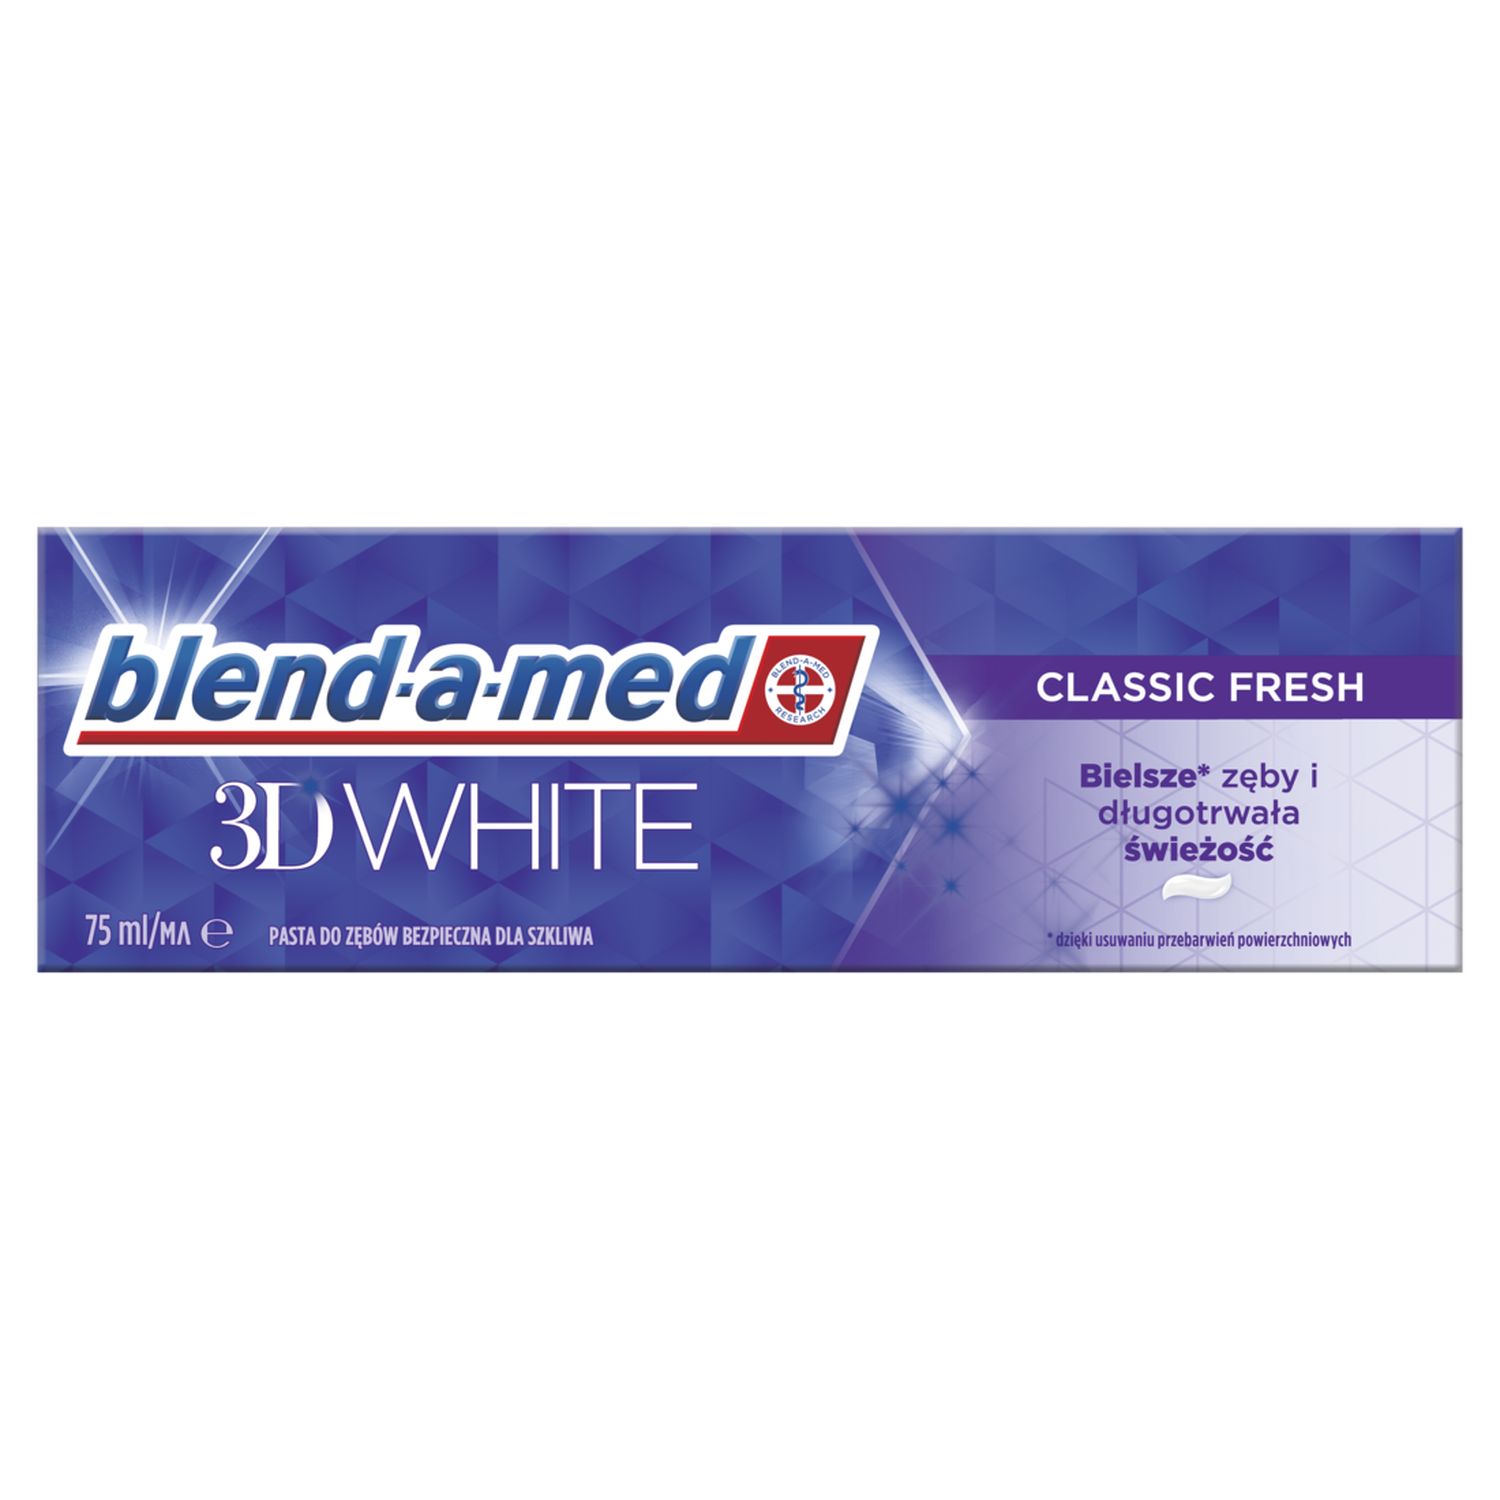 Зубная паста Blend-a-med 3D White Классическая свежесть 75 мл - фото 3